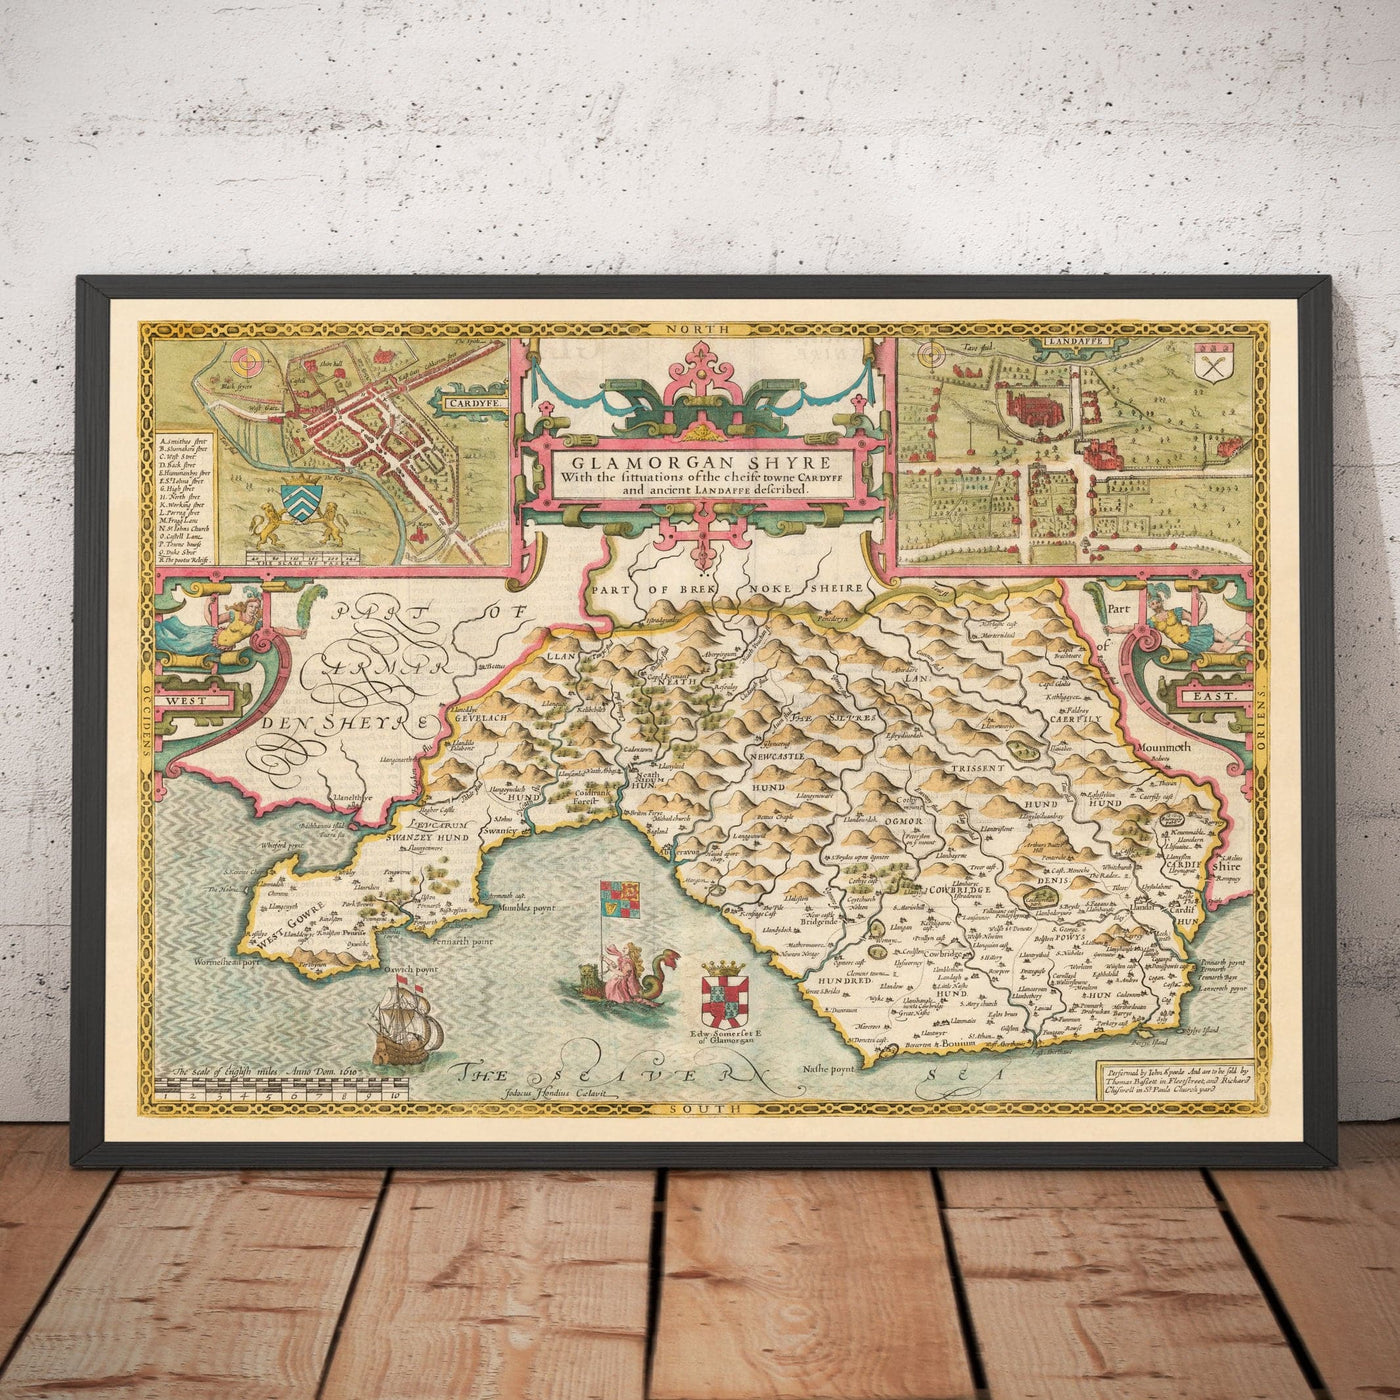 Old Map of Glamorgan Wales, 1611 by John Speed - Cardiff, Swansea, Bridgend, Port Talbot, Barry